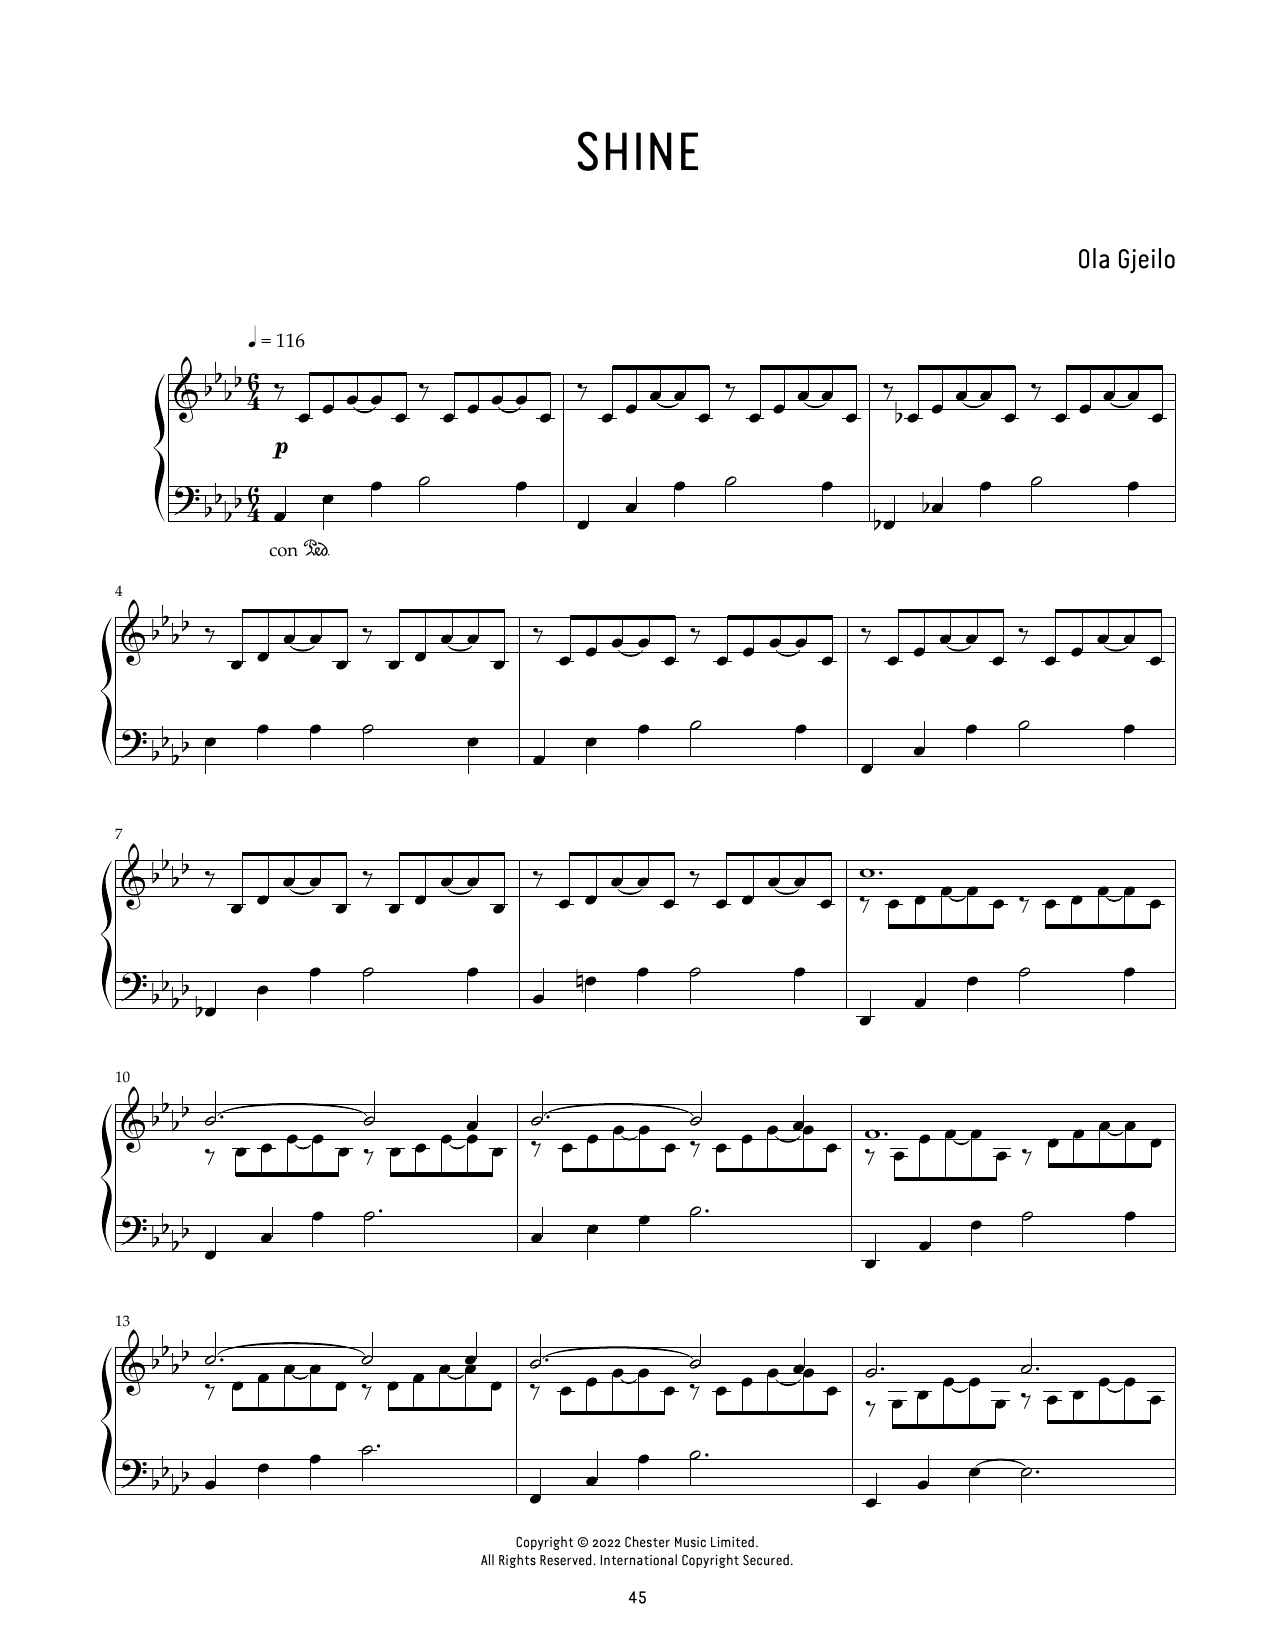 Ola Gjeilo Shine Sheet Music Notes & Chords for Piano Solo - Download or Print PDF